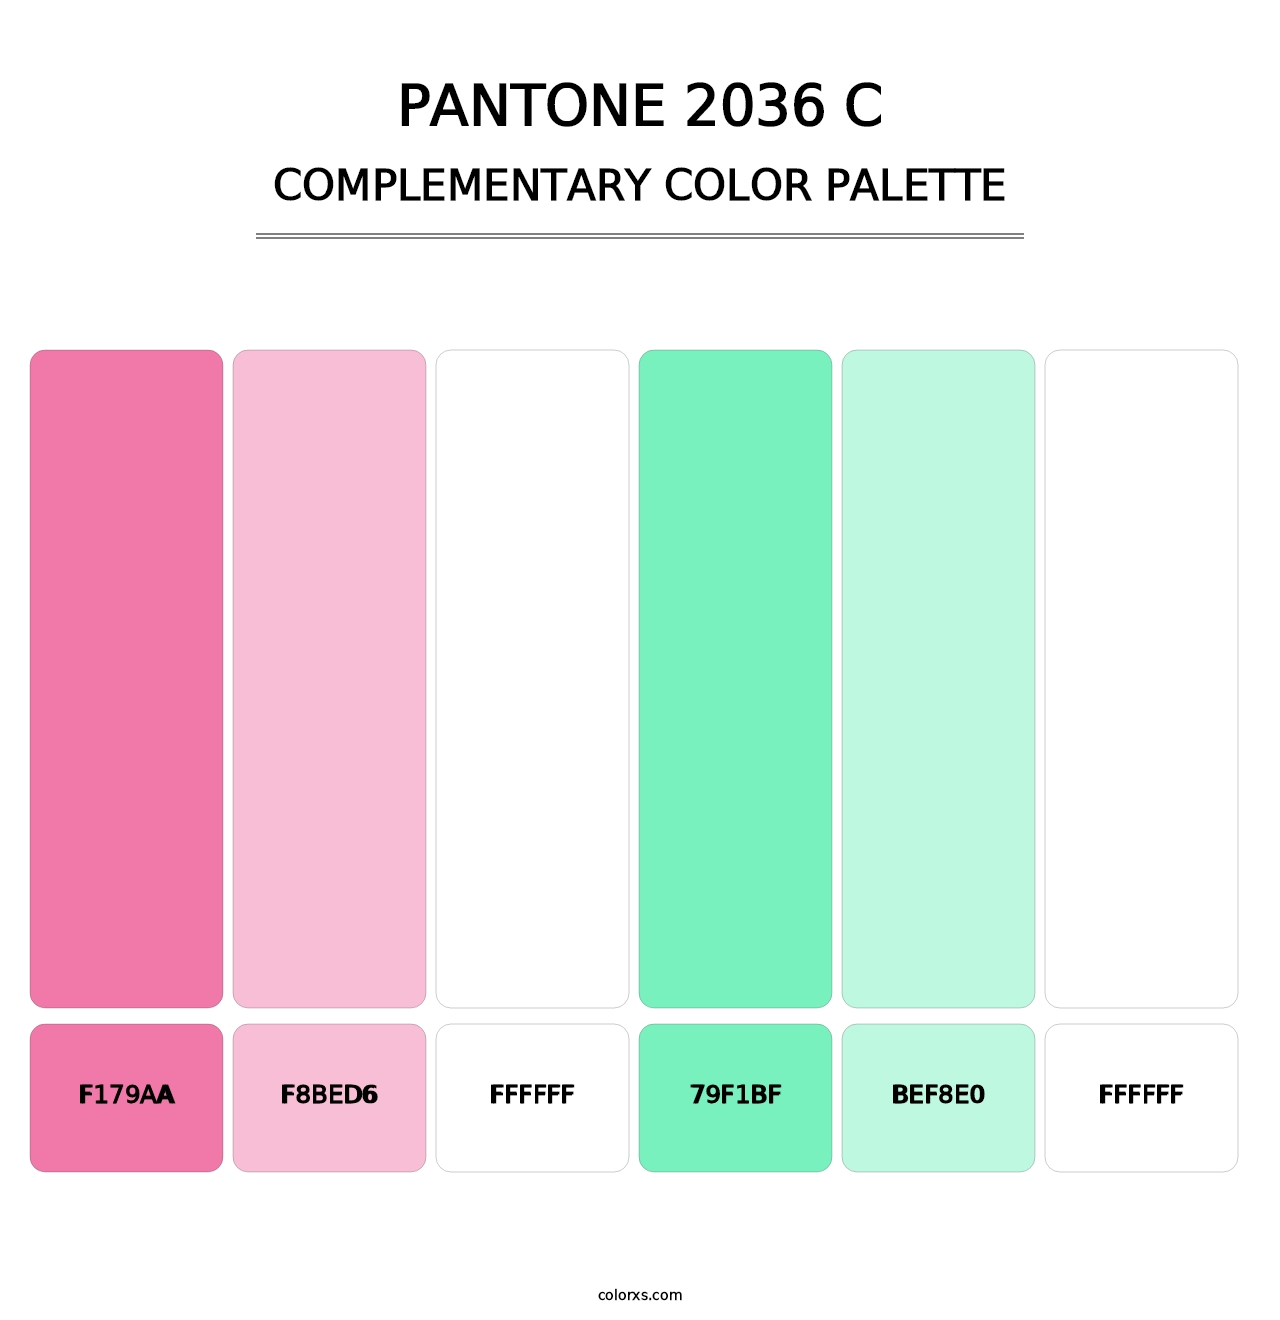 PANTONE 2036 C - Complementary Color Palette